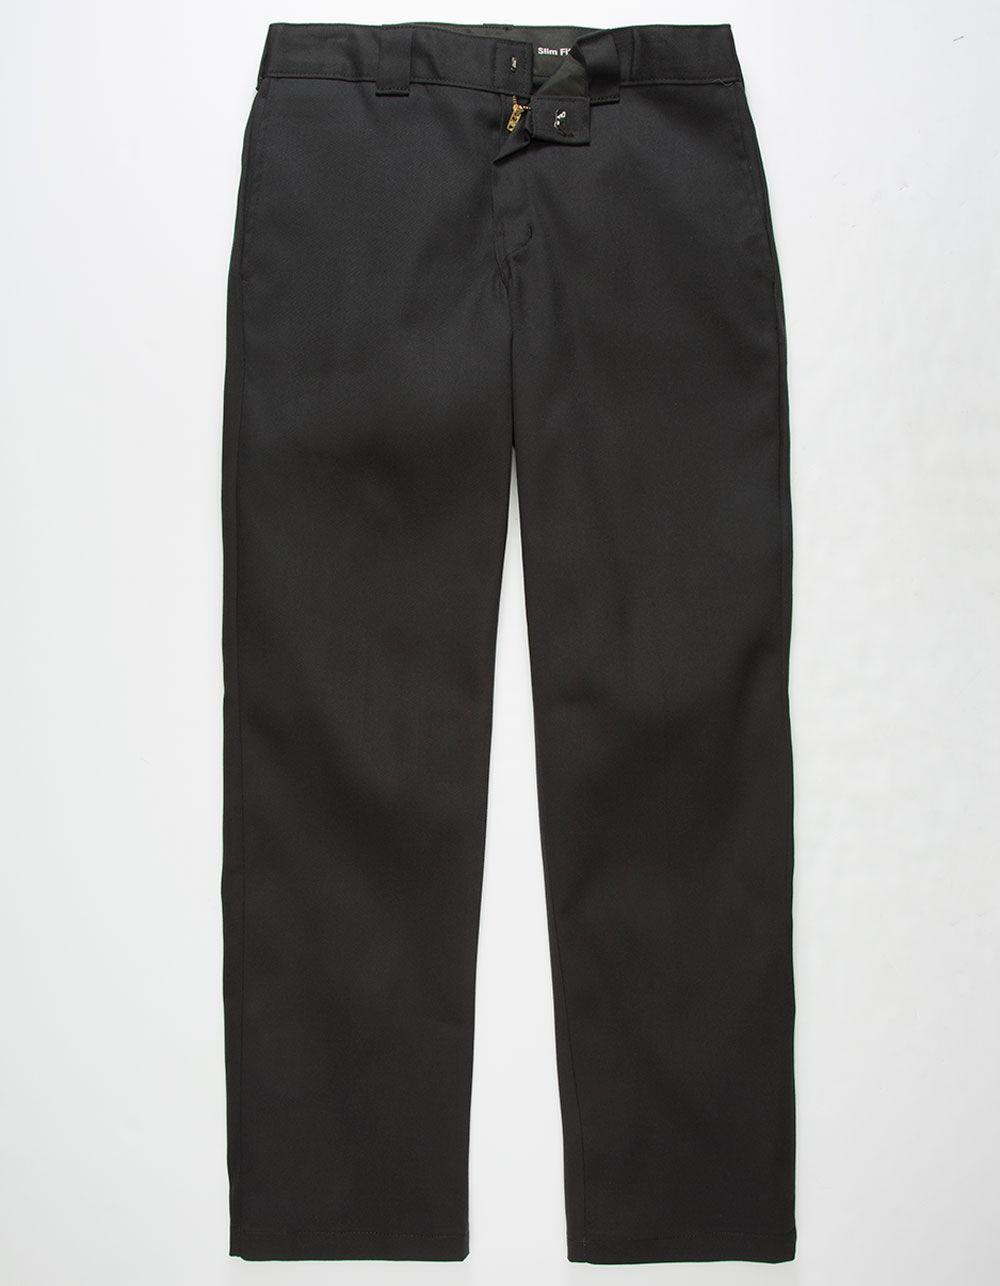 Dickies 873 Flex Slim Fit Mens Pants in Black for Men - Lyst